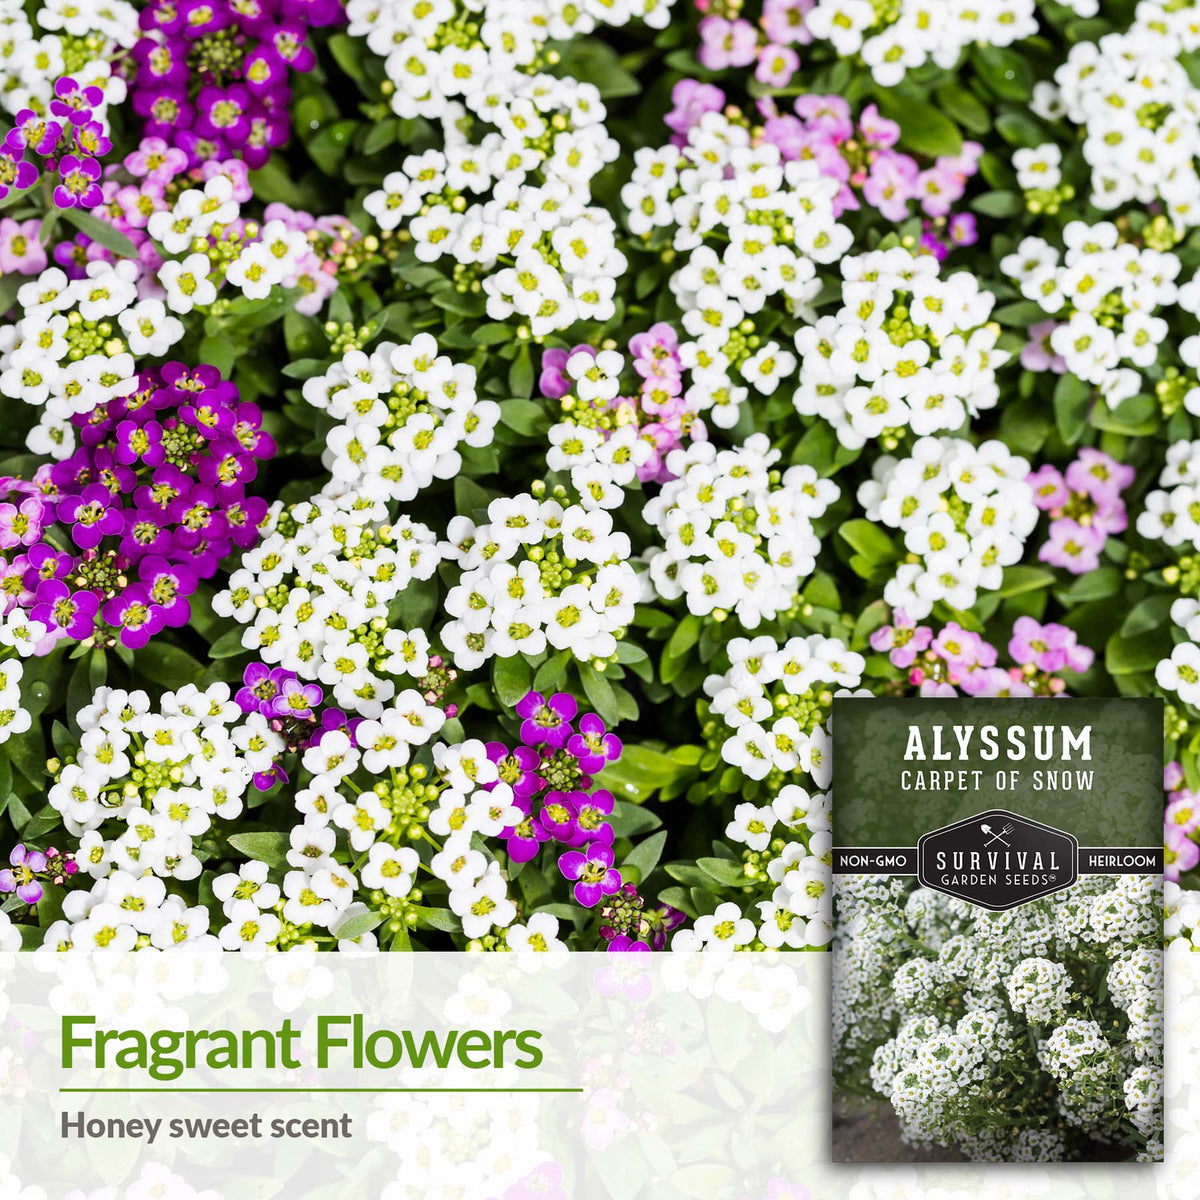 Carpet of Snow Alyssum flowers have a honey sweet scent